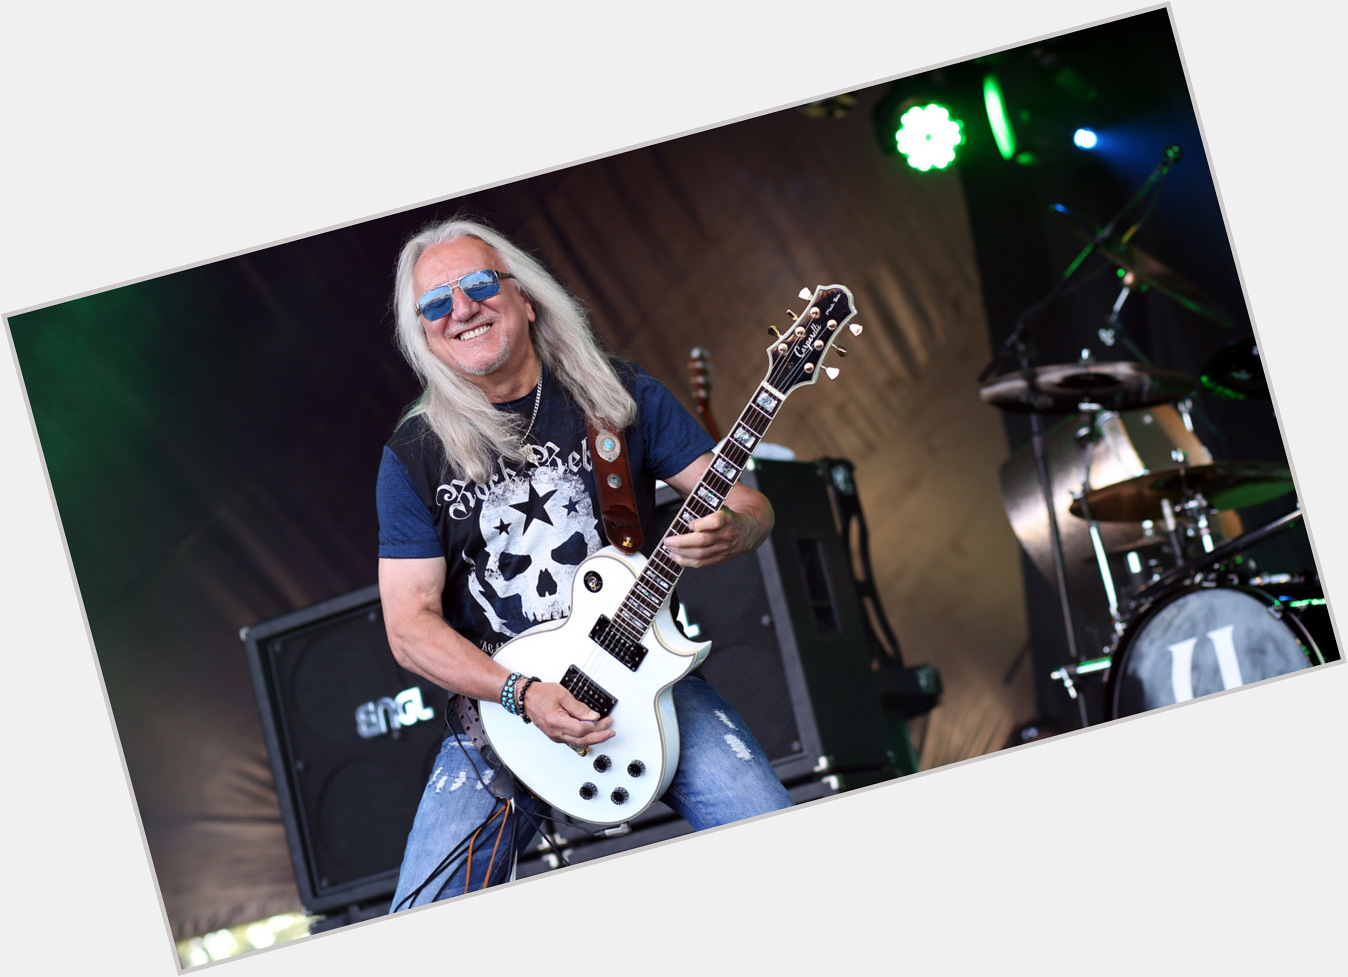 Happy birthday to the amazing Uriah Heep guitarist Mick Box! He celebrates today his 74th birthday! 